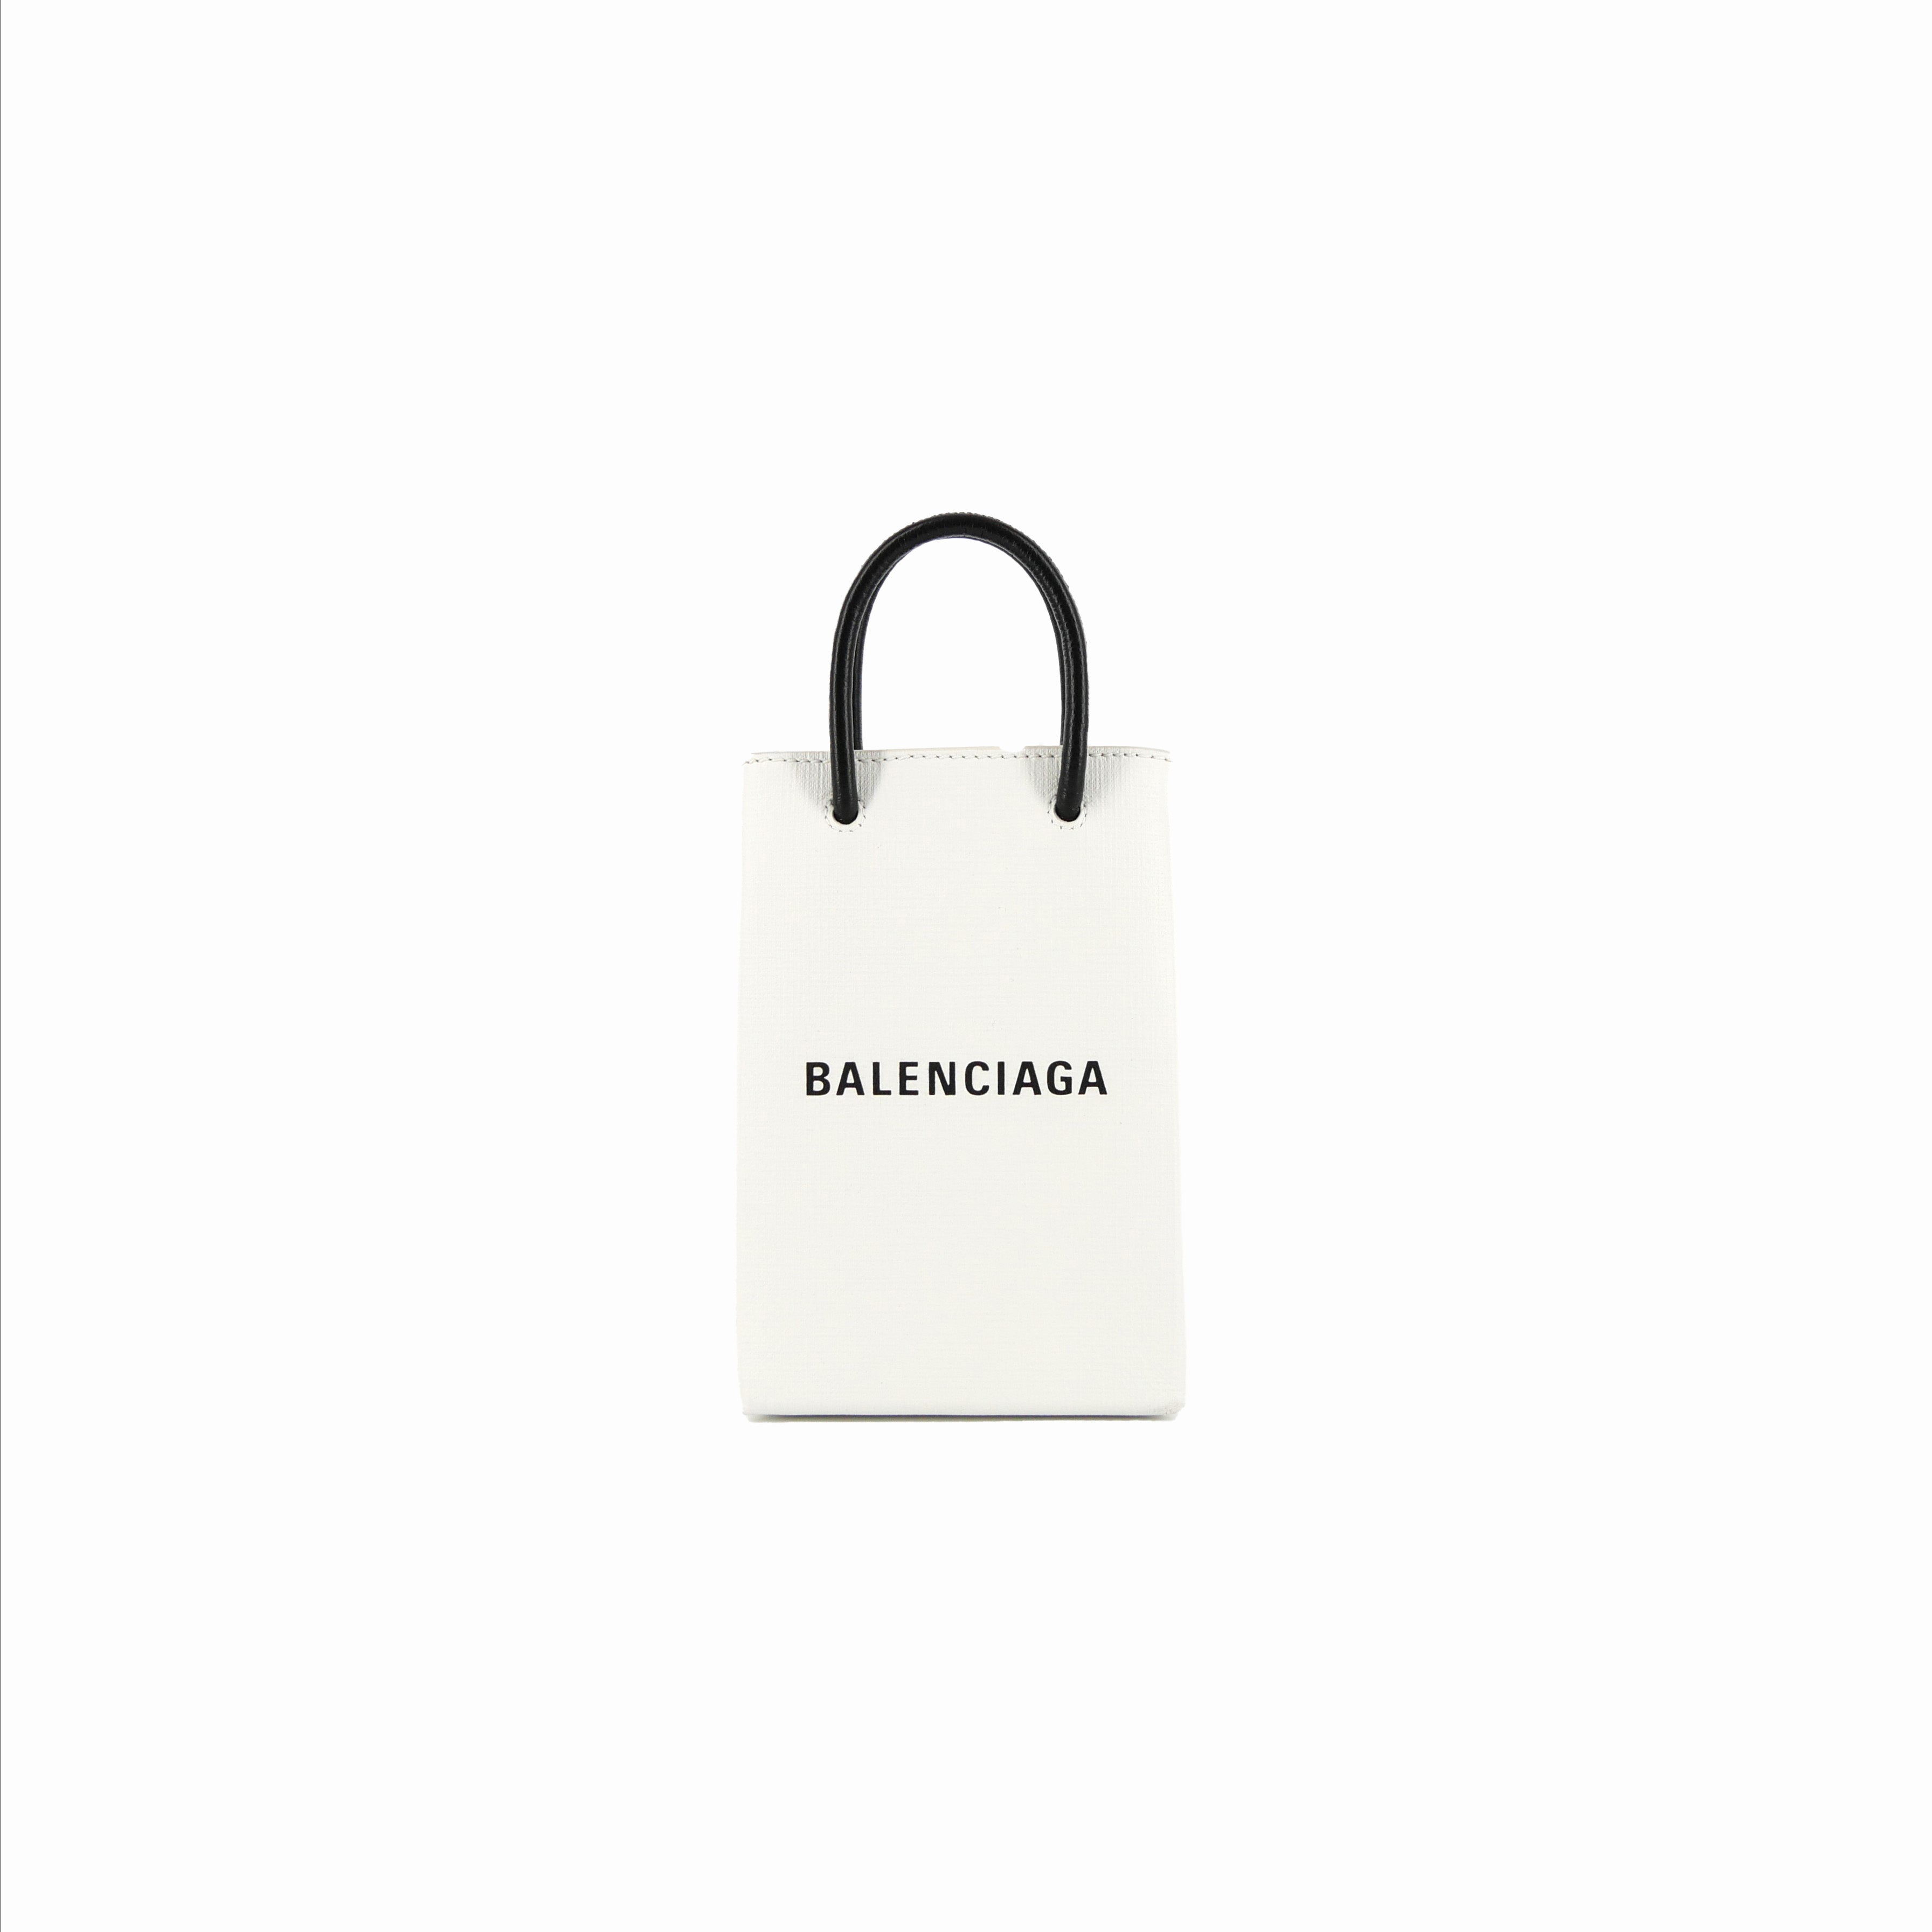 BALENCIAGA[バレンシアガ] / MINI SHOPPING BAG (WHITE)[ミニ ショッピング バッグ]